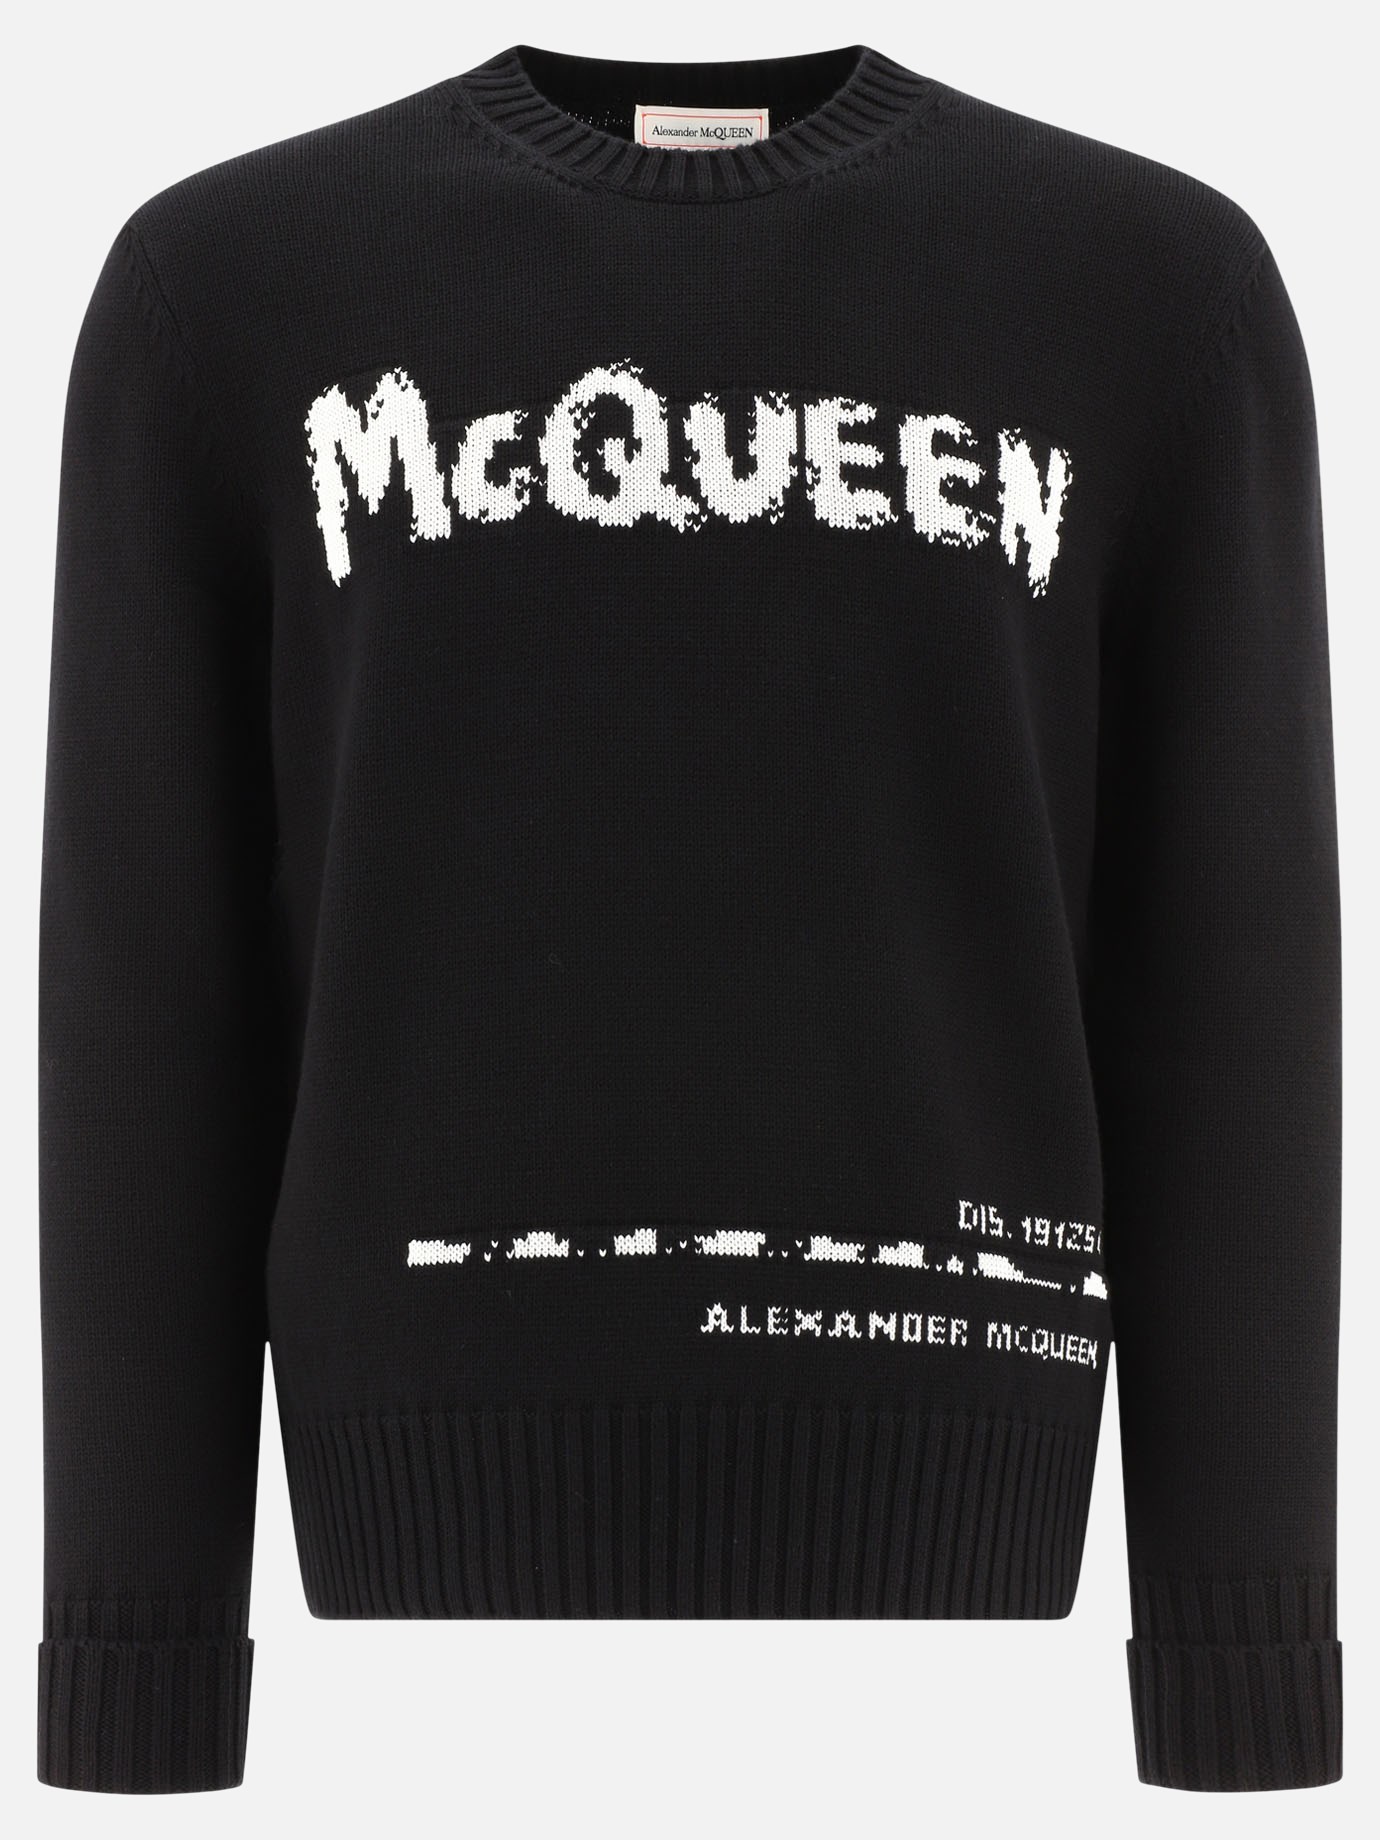  Graffiti  sweaterby Alexander McQueen - 0